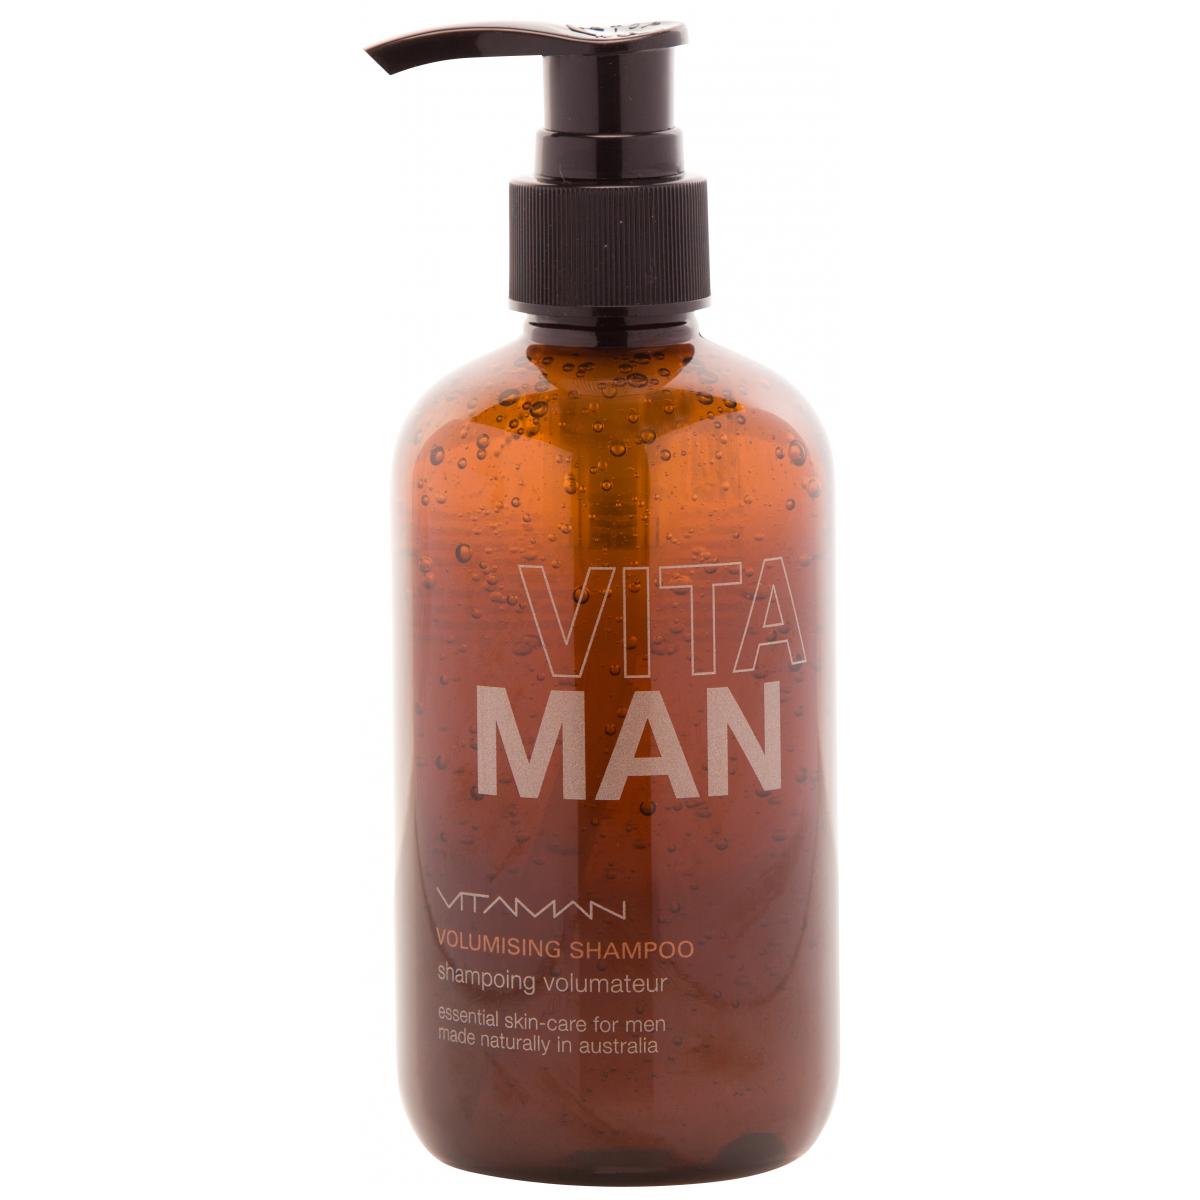 Vita man shampoo for dry and fine hair